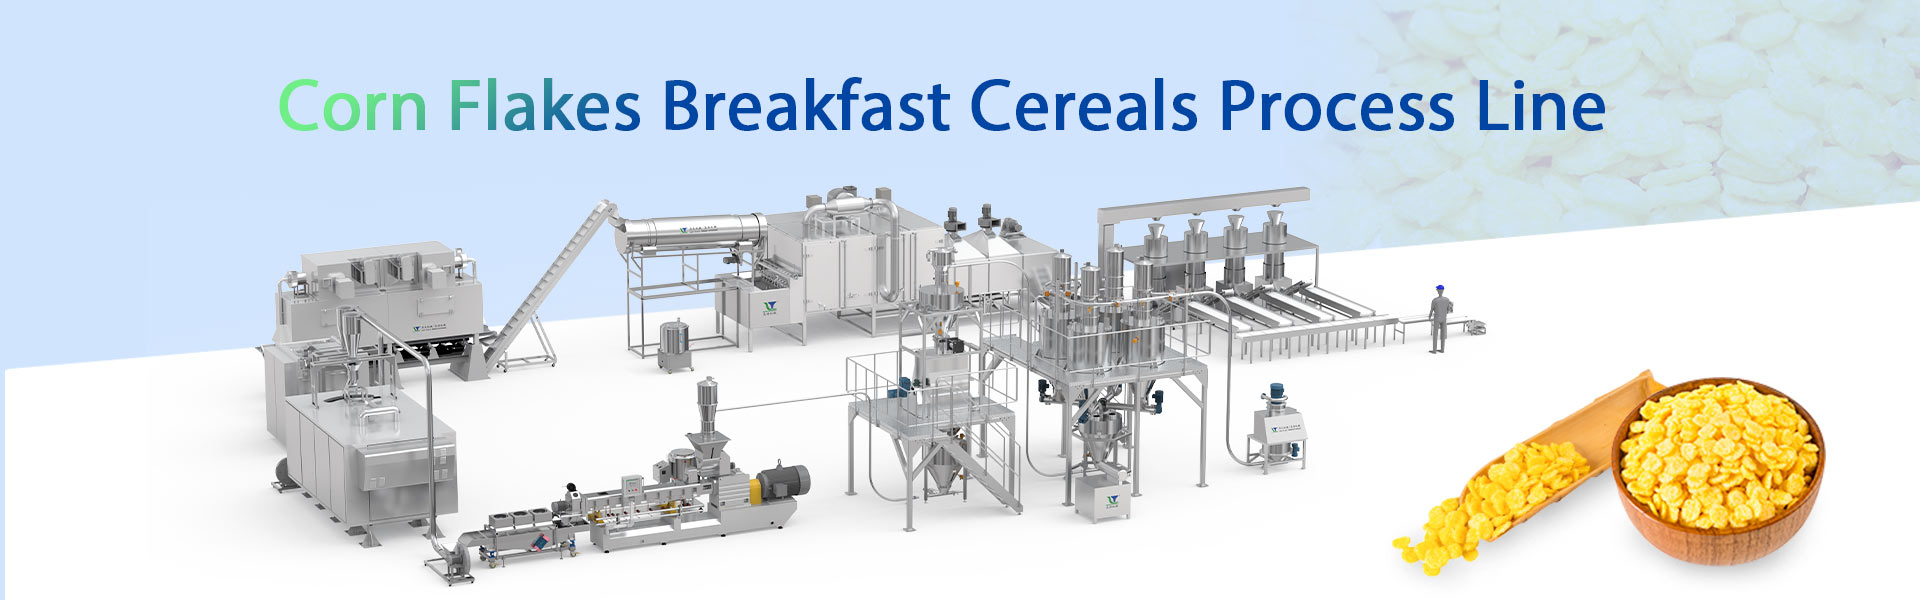 Corn-Flakes-Breakfast-Cereals-Process-Line